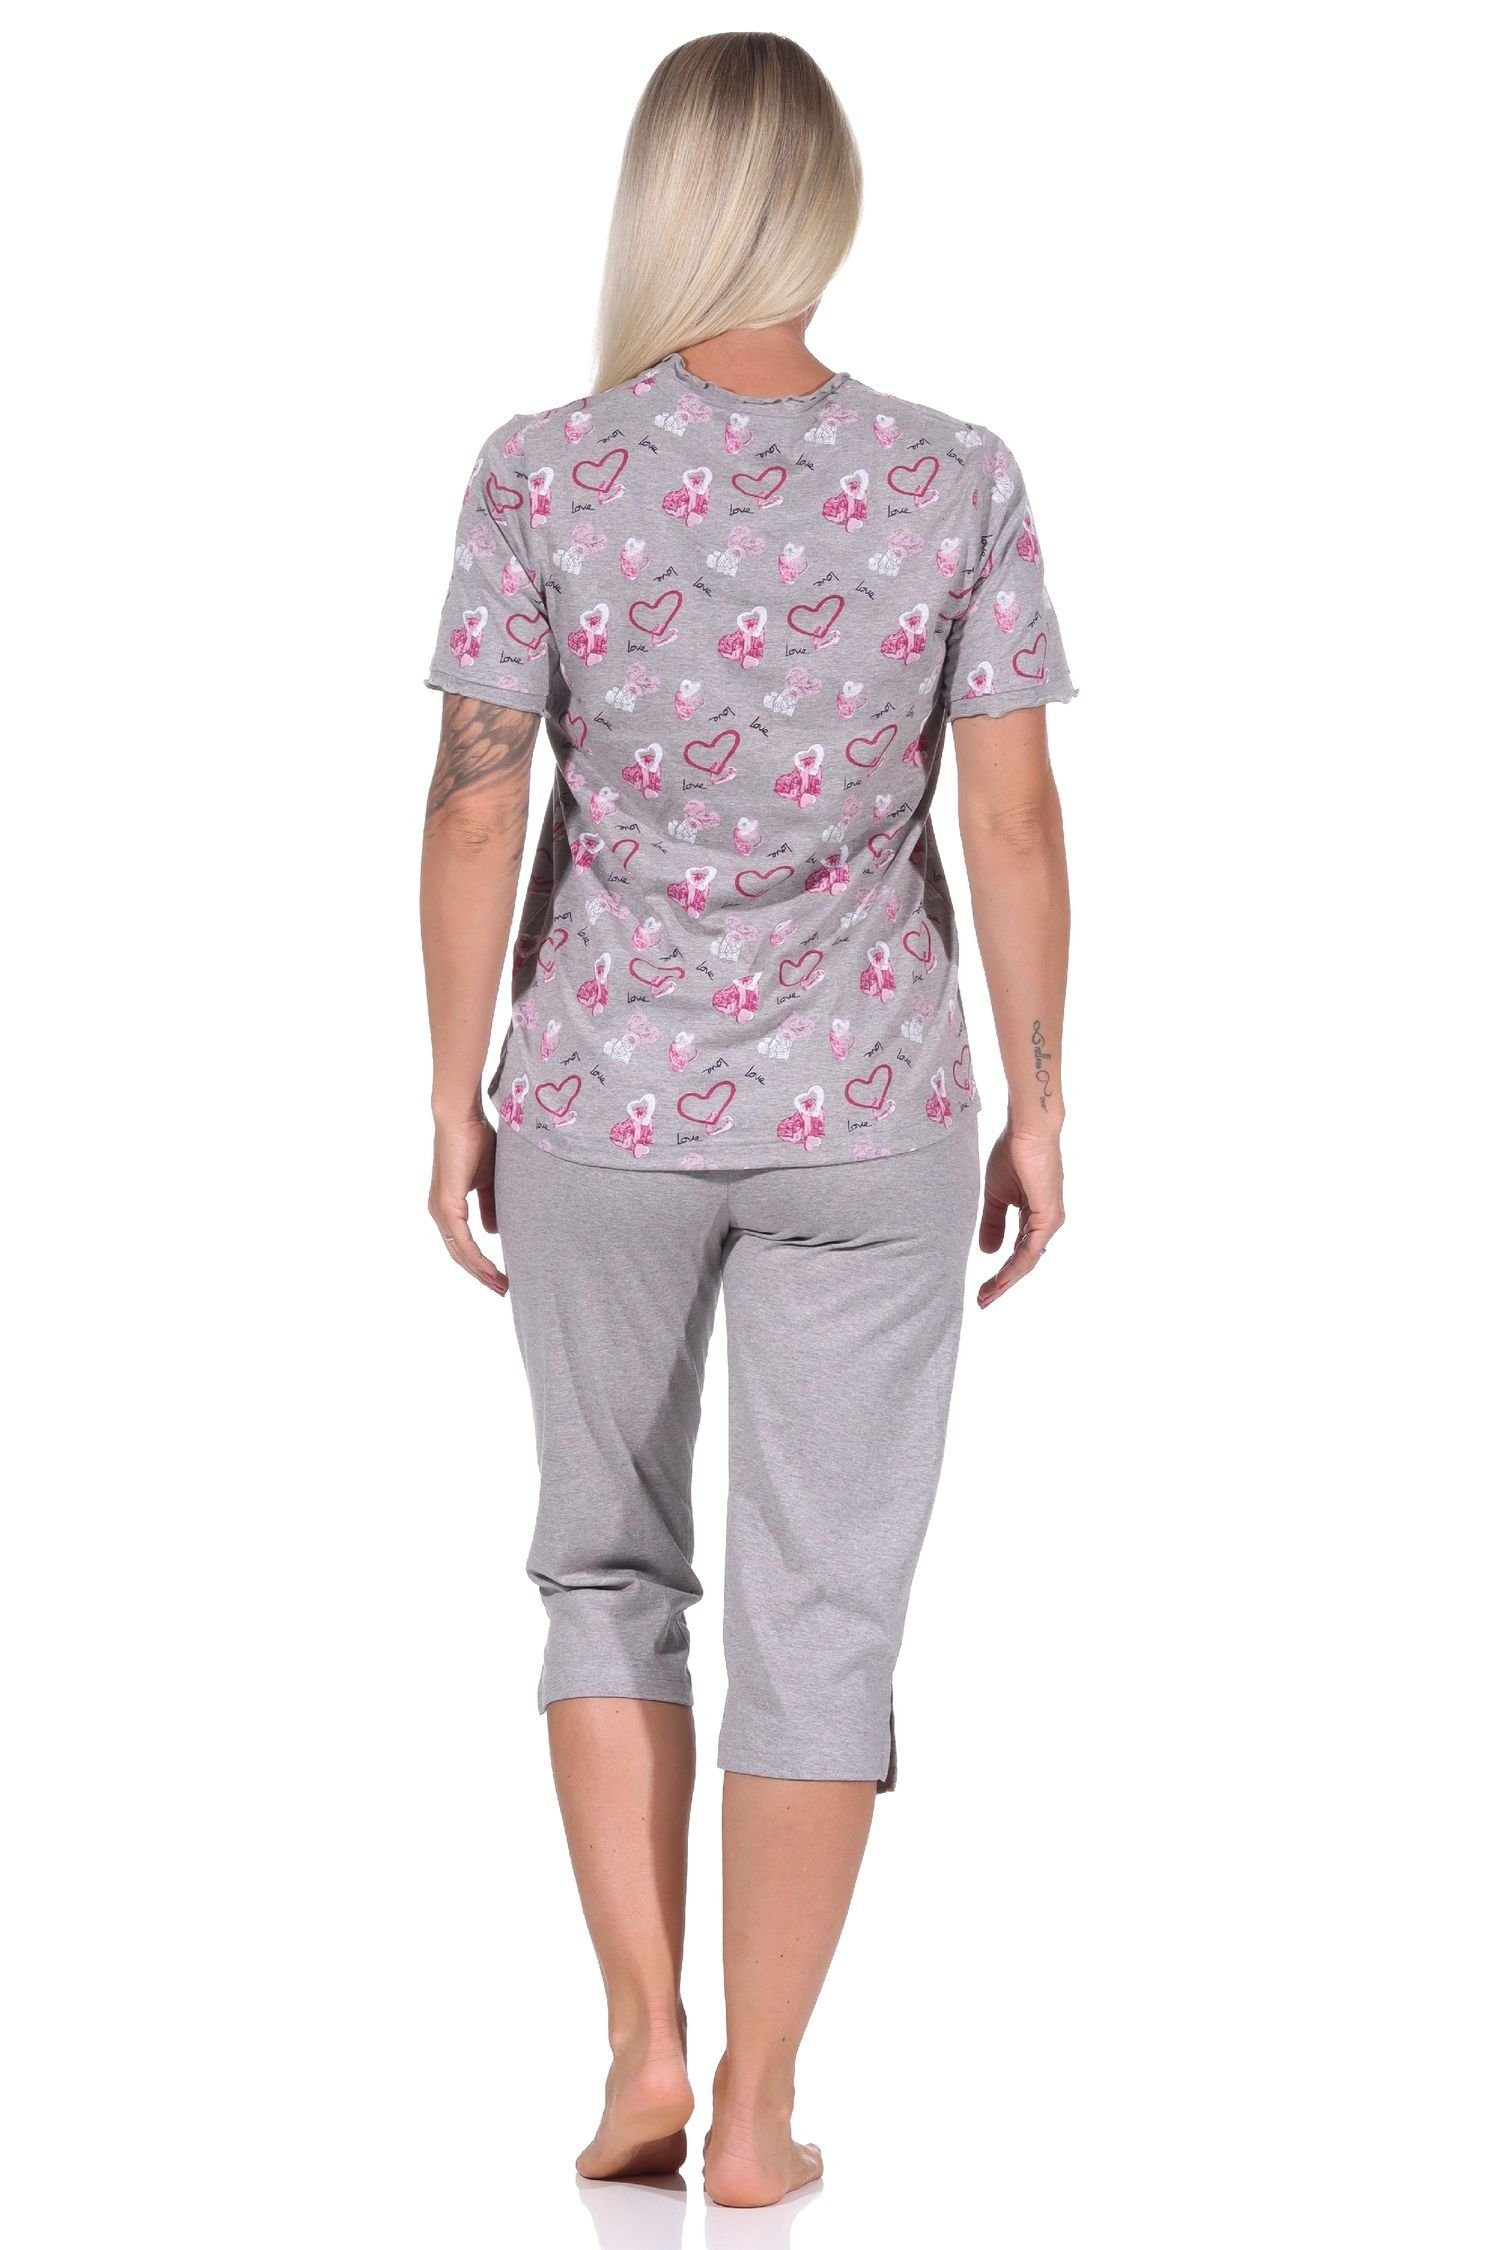 Übergrößen Pyjama grau-melange Herz Schlafanzug Capri in kurzarm auch - Damen Optik Normann in